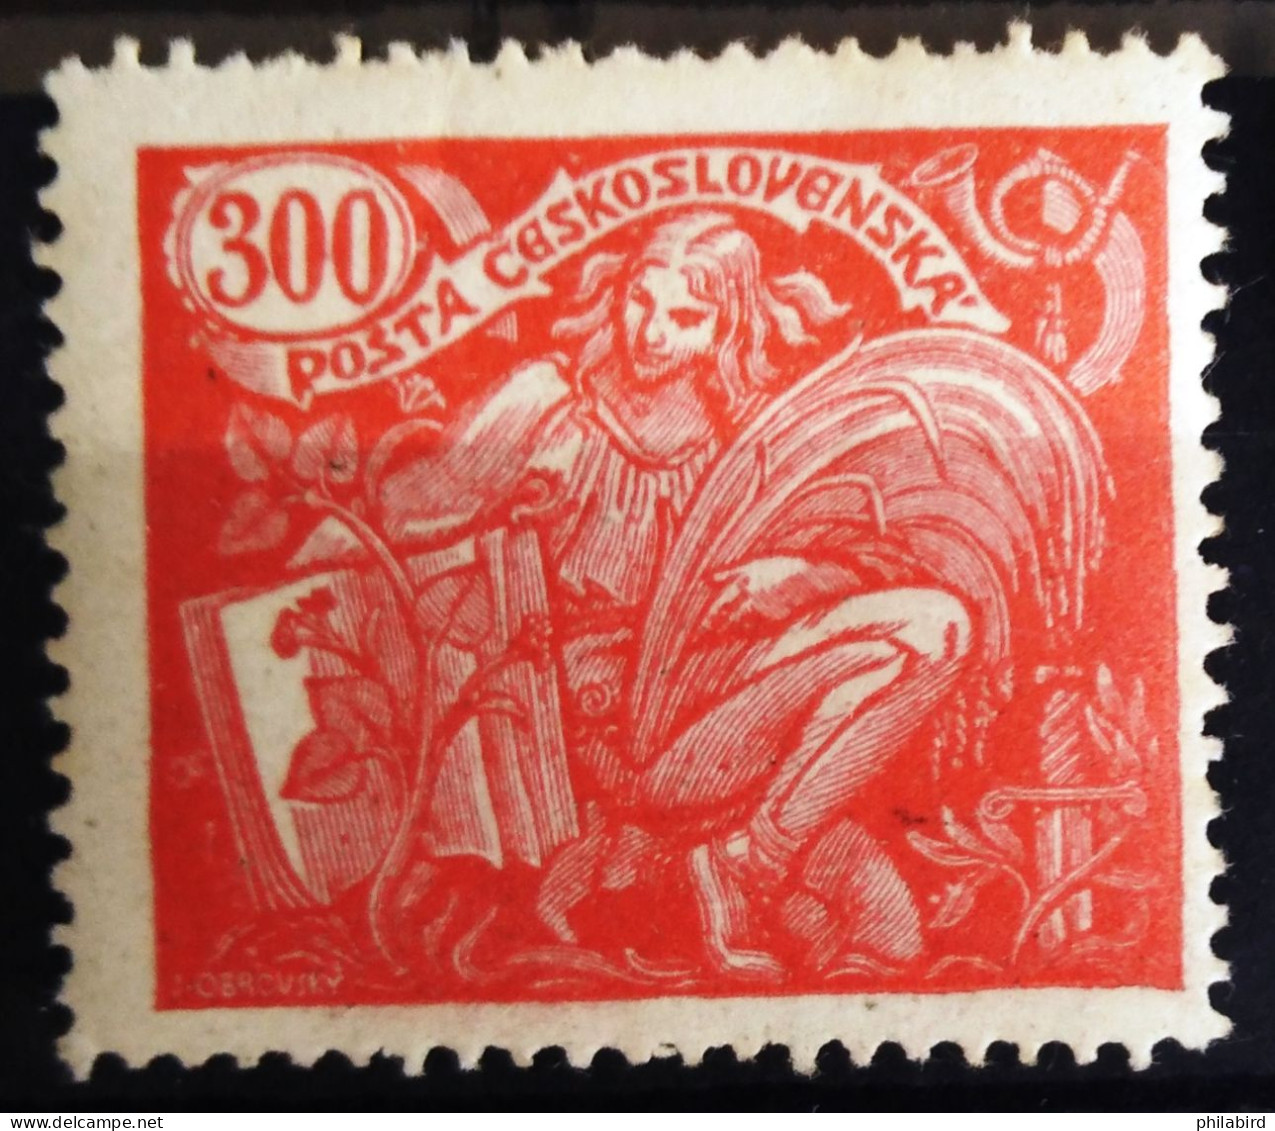 TCHECOSLOVAQUIE                          N° 178                               NEUF* - Unused Stamps